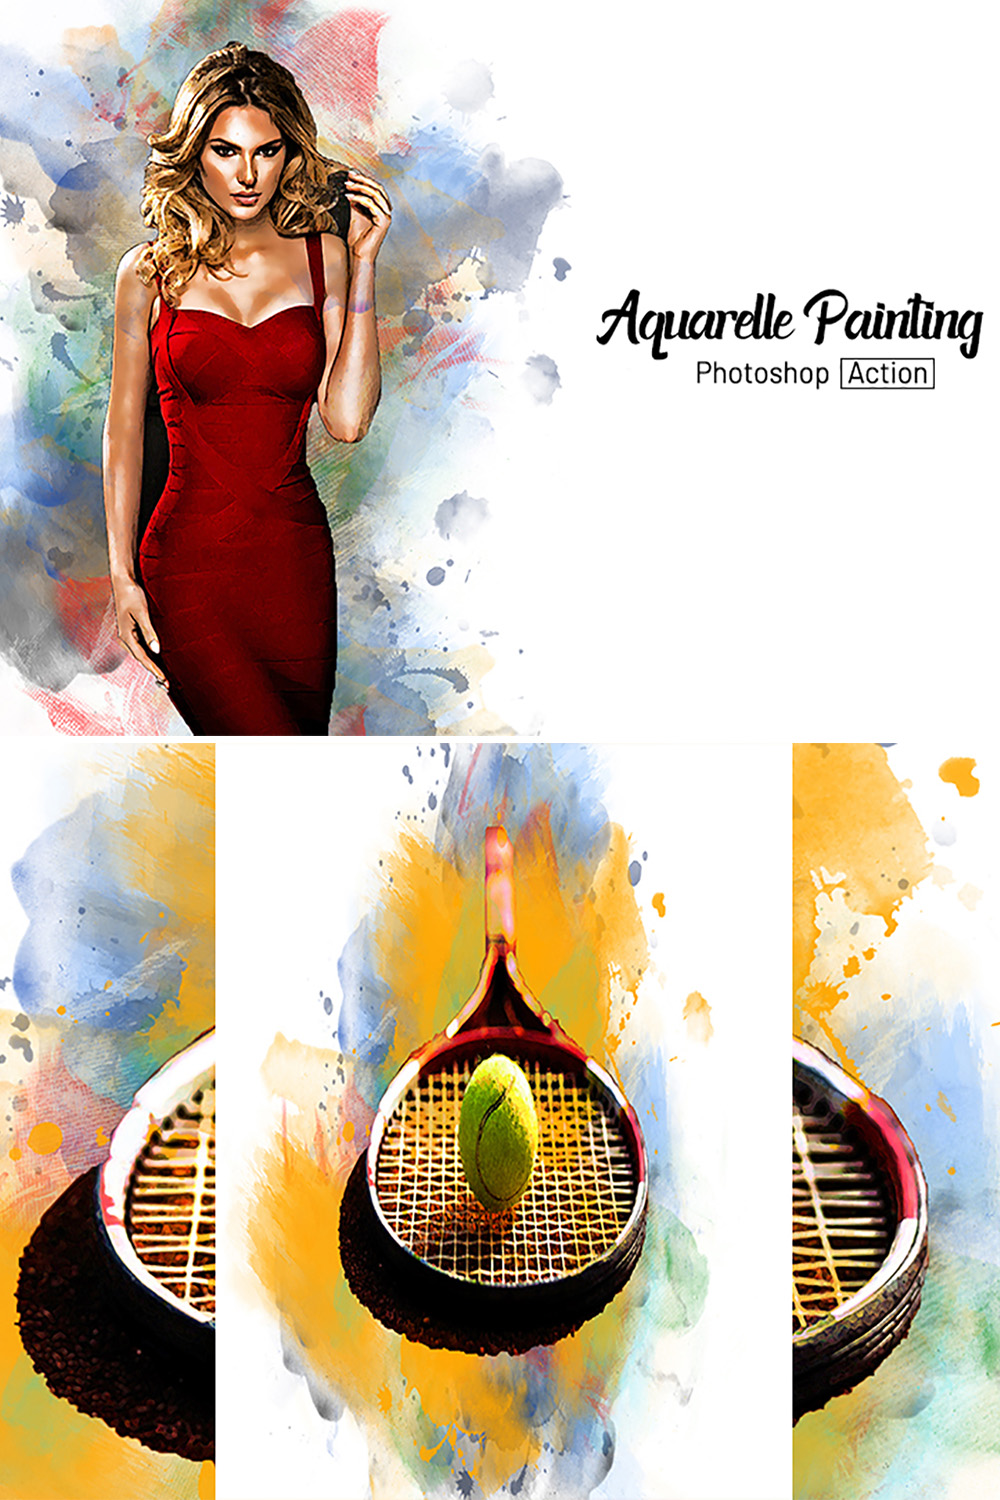 Aquarelle Painting Photoshop Action's pinterest preview image.